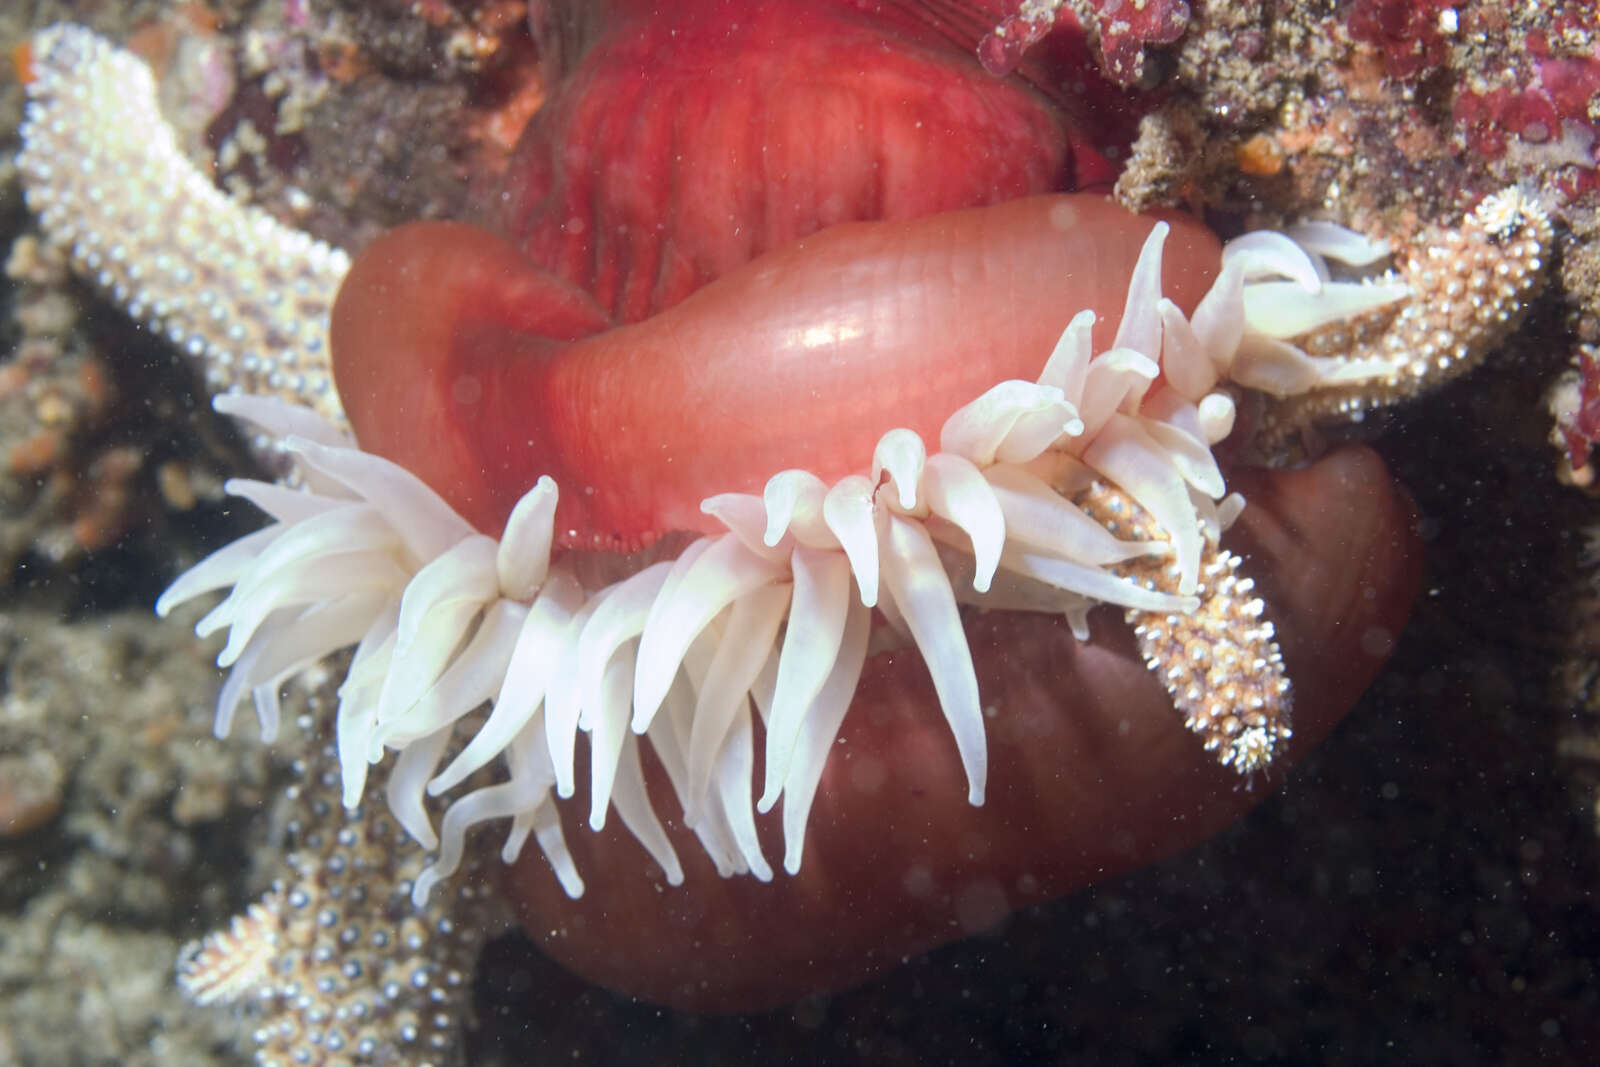 Image of Fish-eating anemone